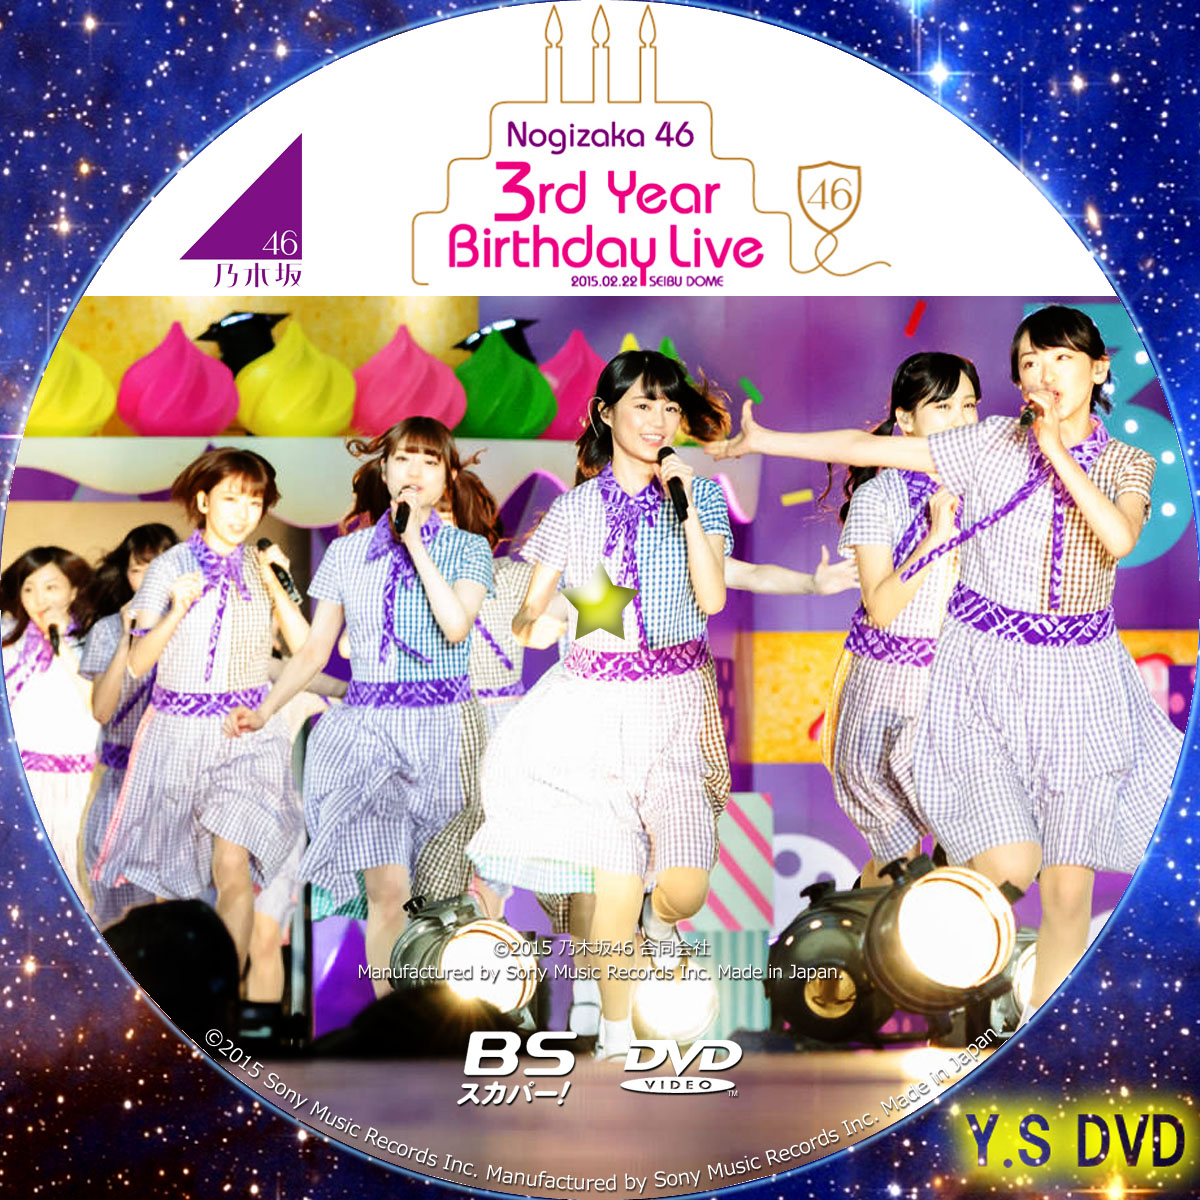 乃木坂46 3rd YEAR BIRTHDAY LIVE DVD www.krzysztofbialy.com